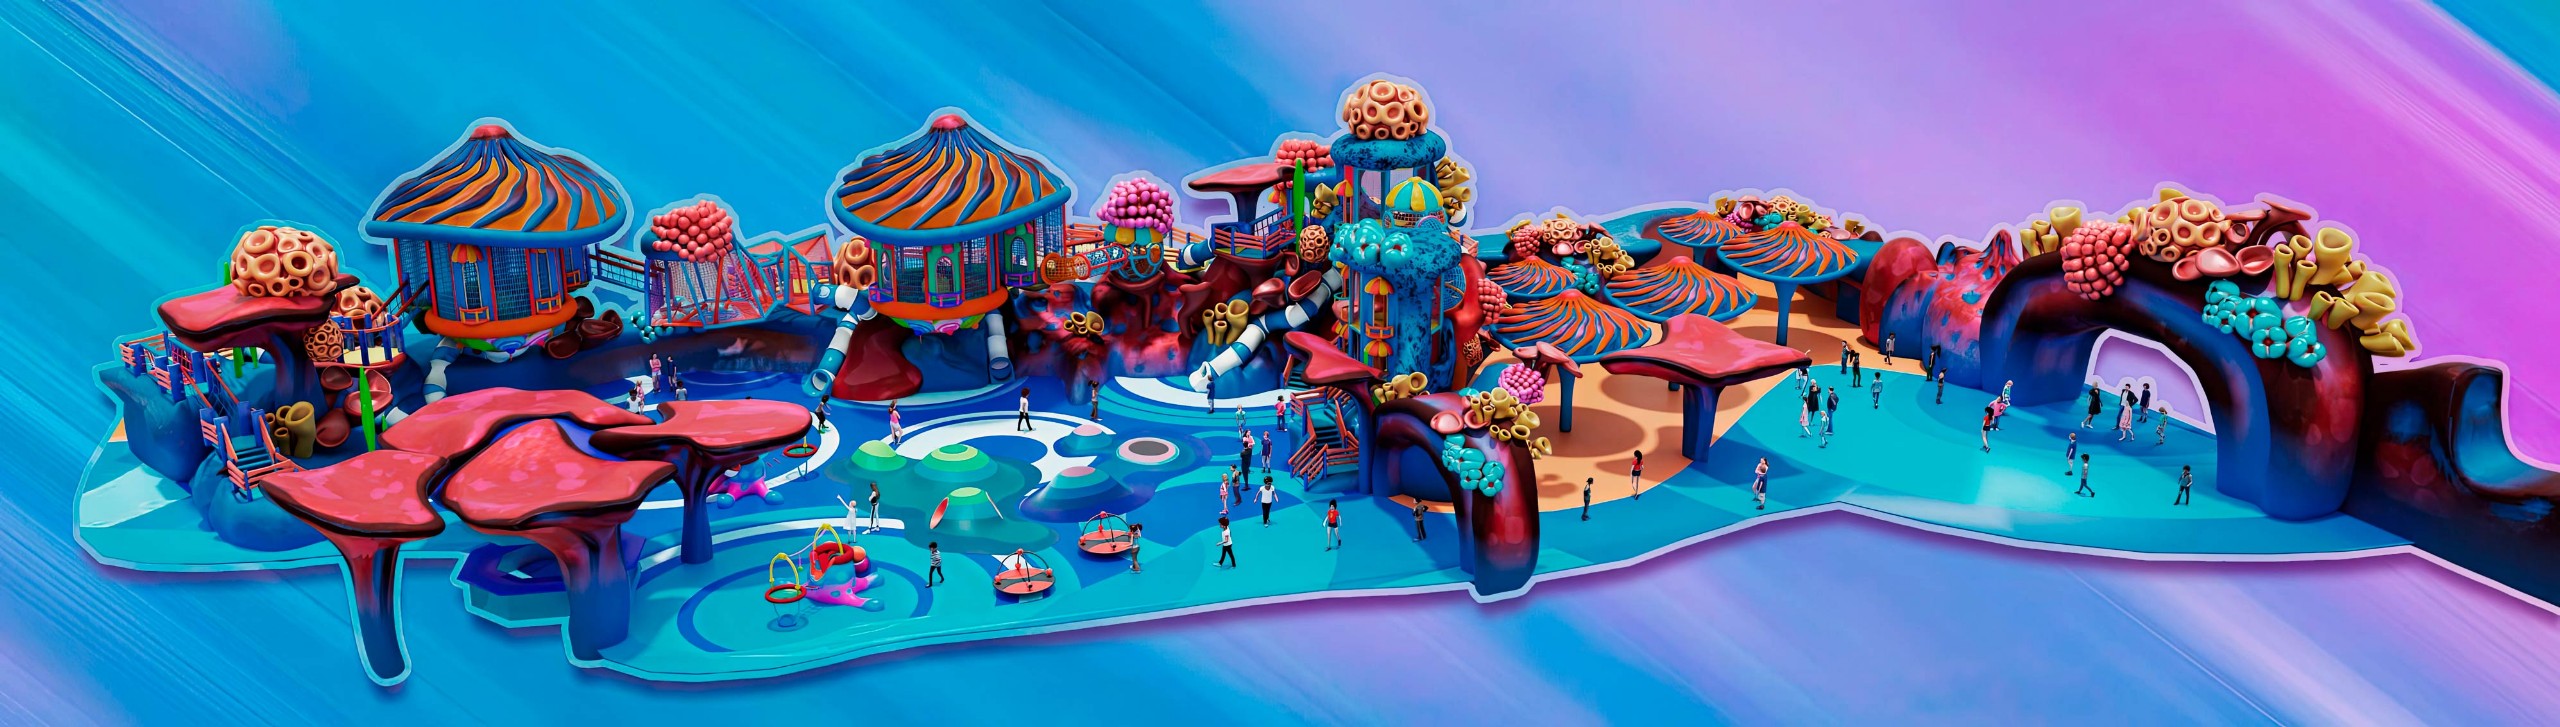 AMUSEMENT PARK PLAYGROUND , themed playground